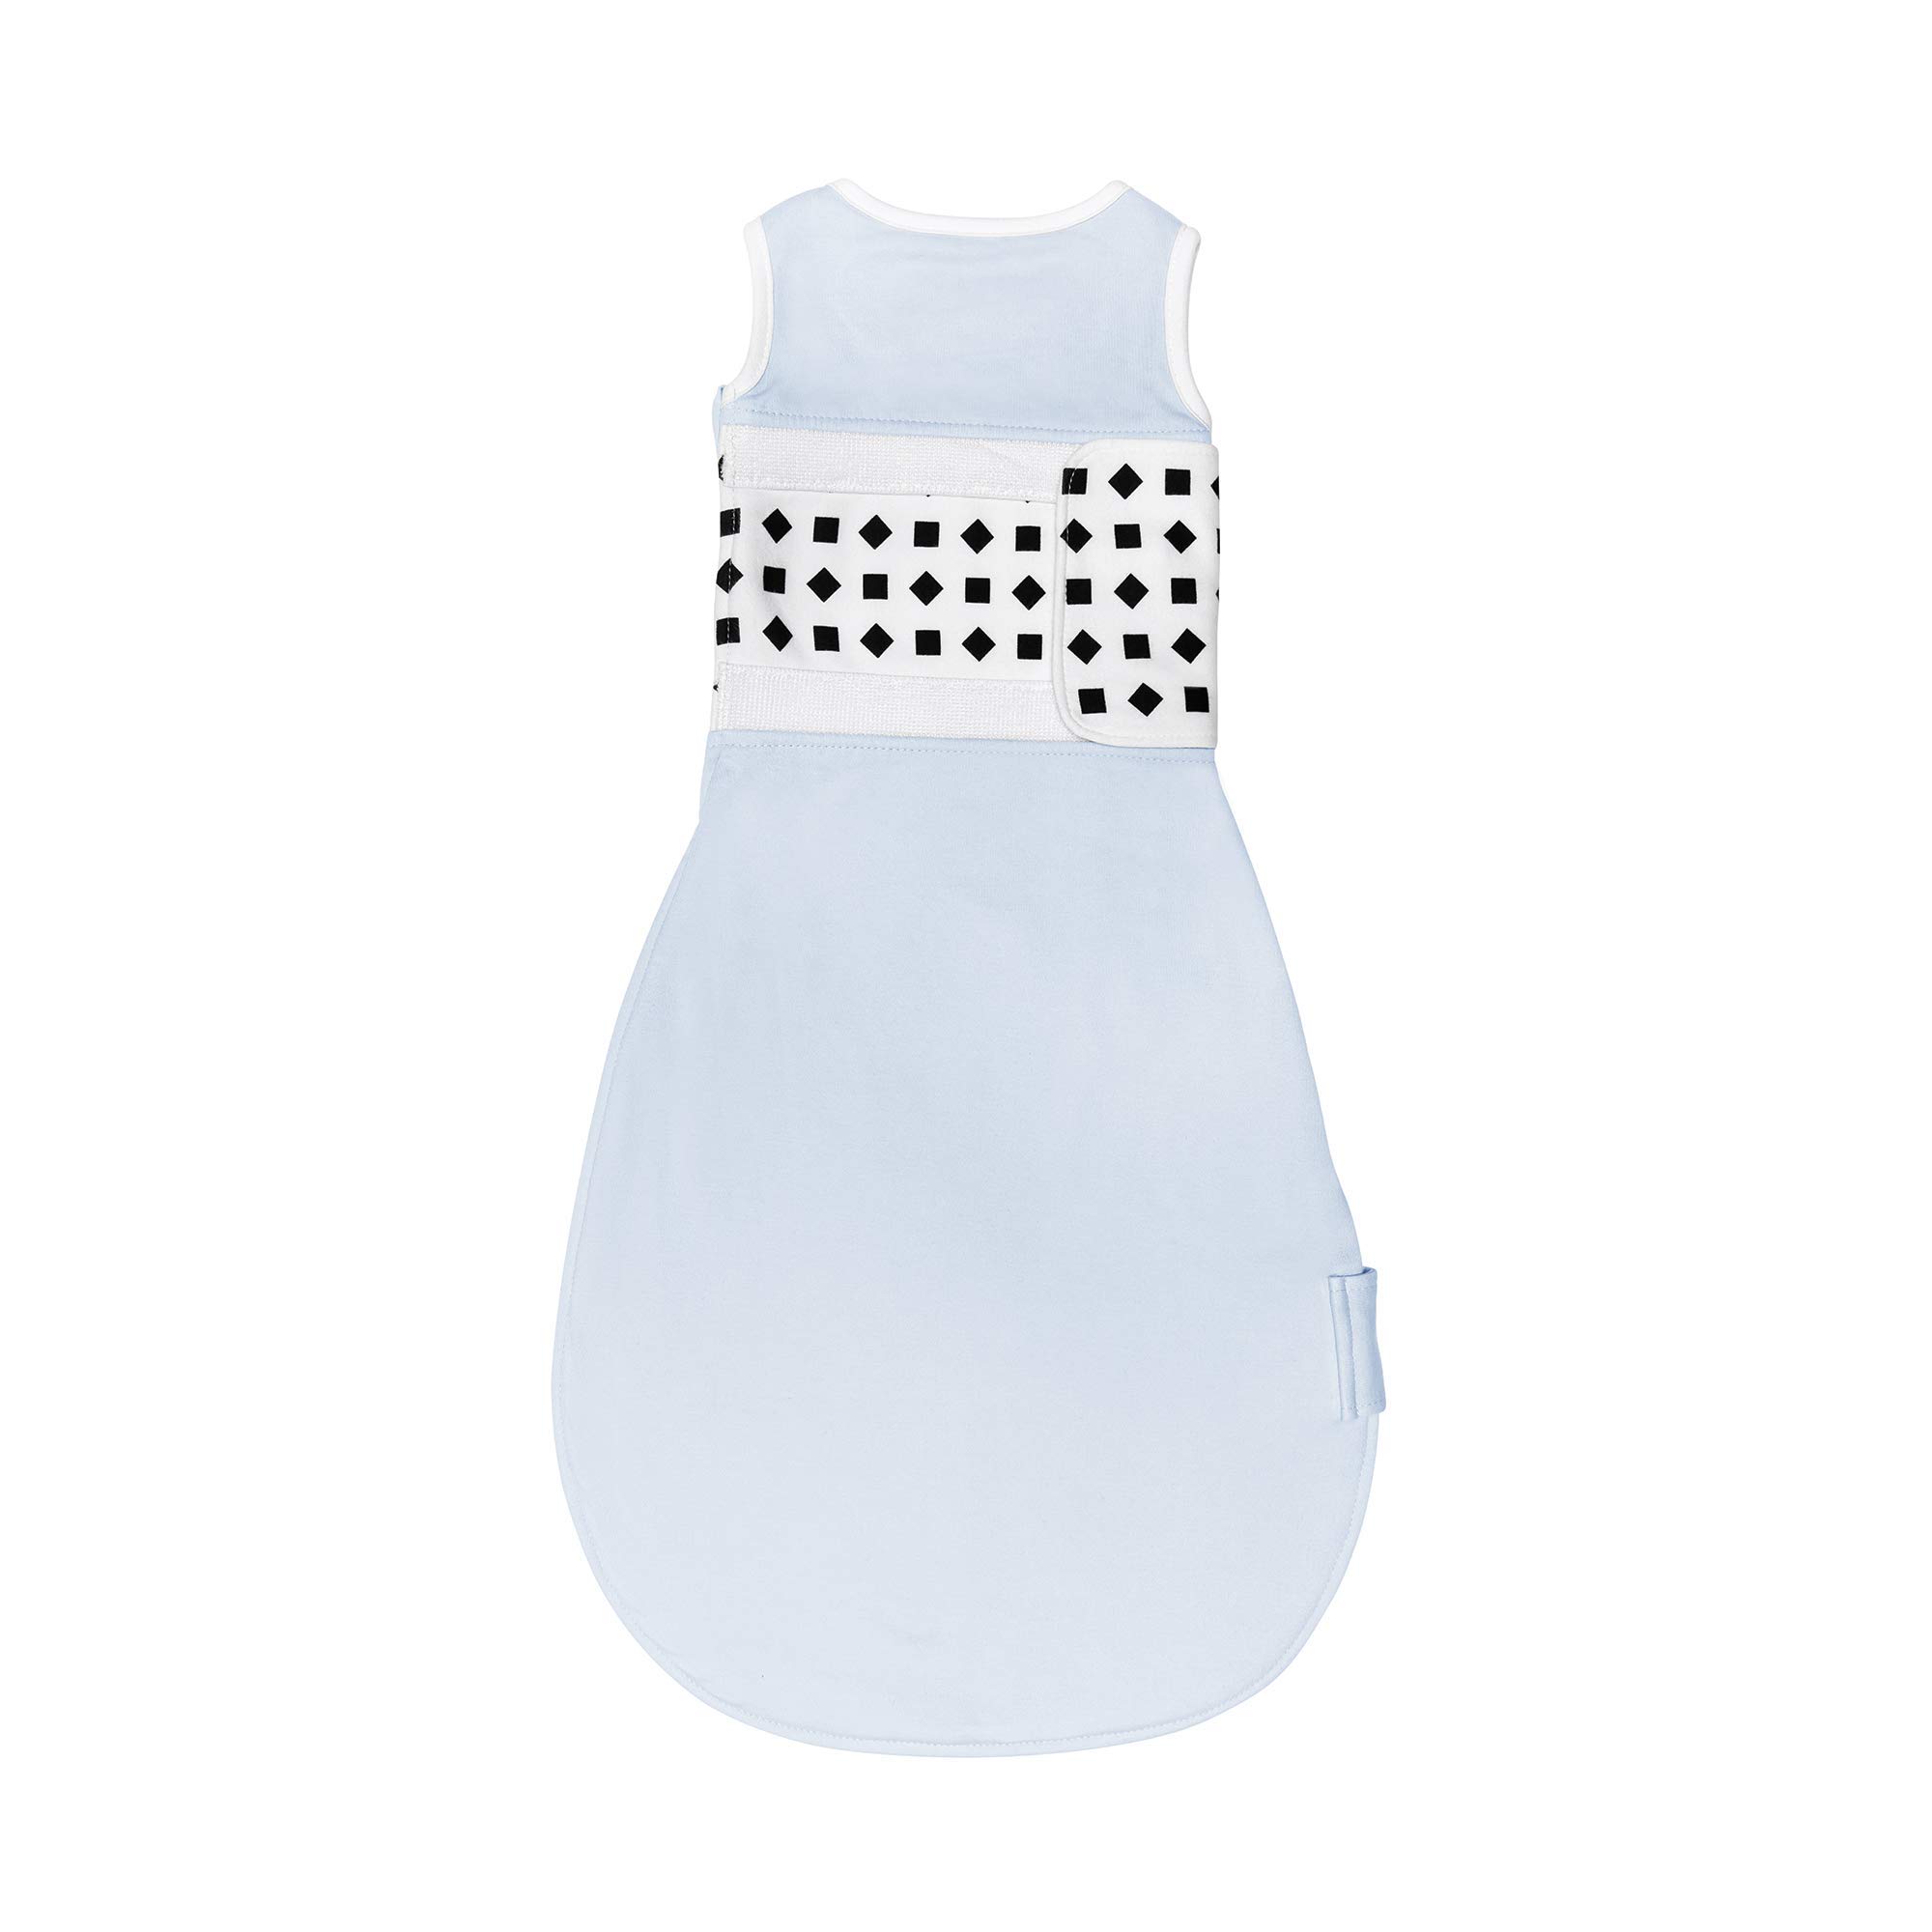 Nanit Breathing Wear Sleeping Bag – 100% Cotton Baby Sleep Sack - Works with Nanit Pro Baby Monitor to Track Breathing Motion Sensor-Free, Real-Time Alerts, Size Medium, 6-12 Months, Powder Blue